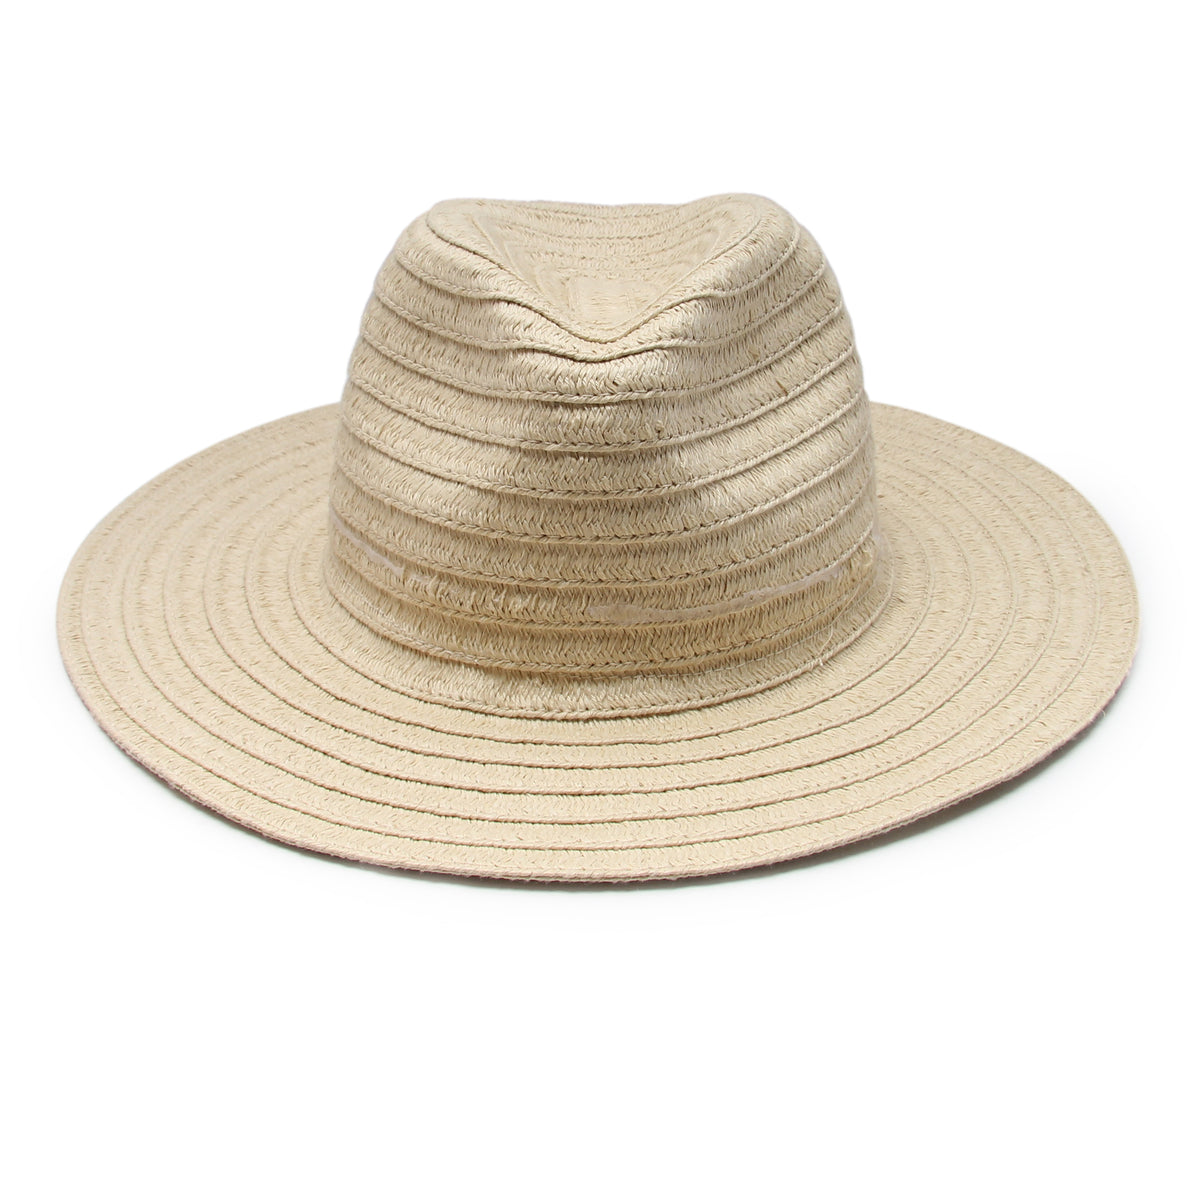 BANDED Women’s Hats + Accessories - Sea Breeze - Straw Hat